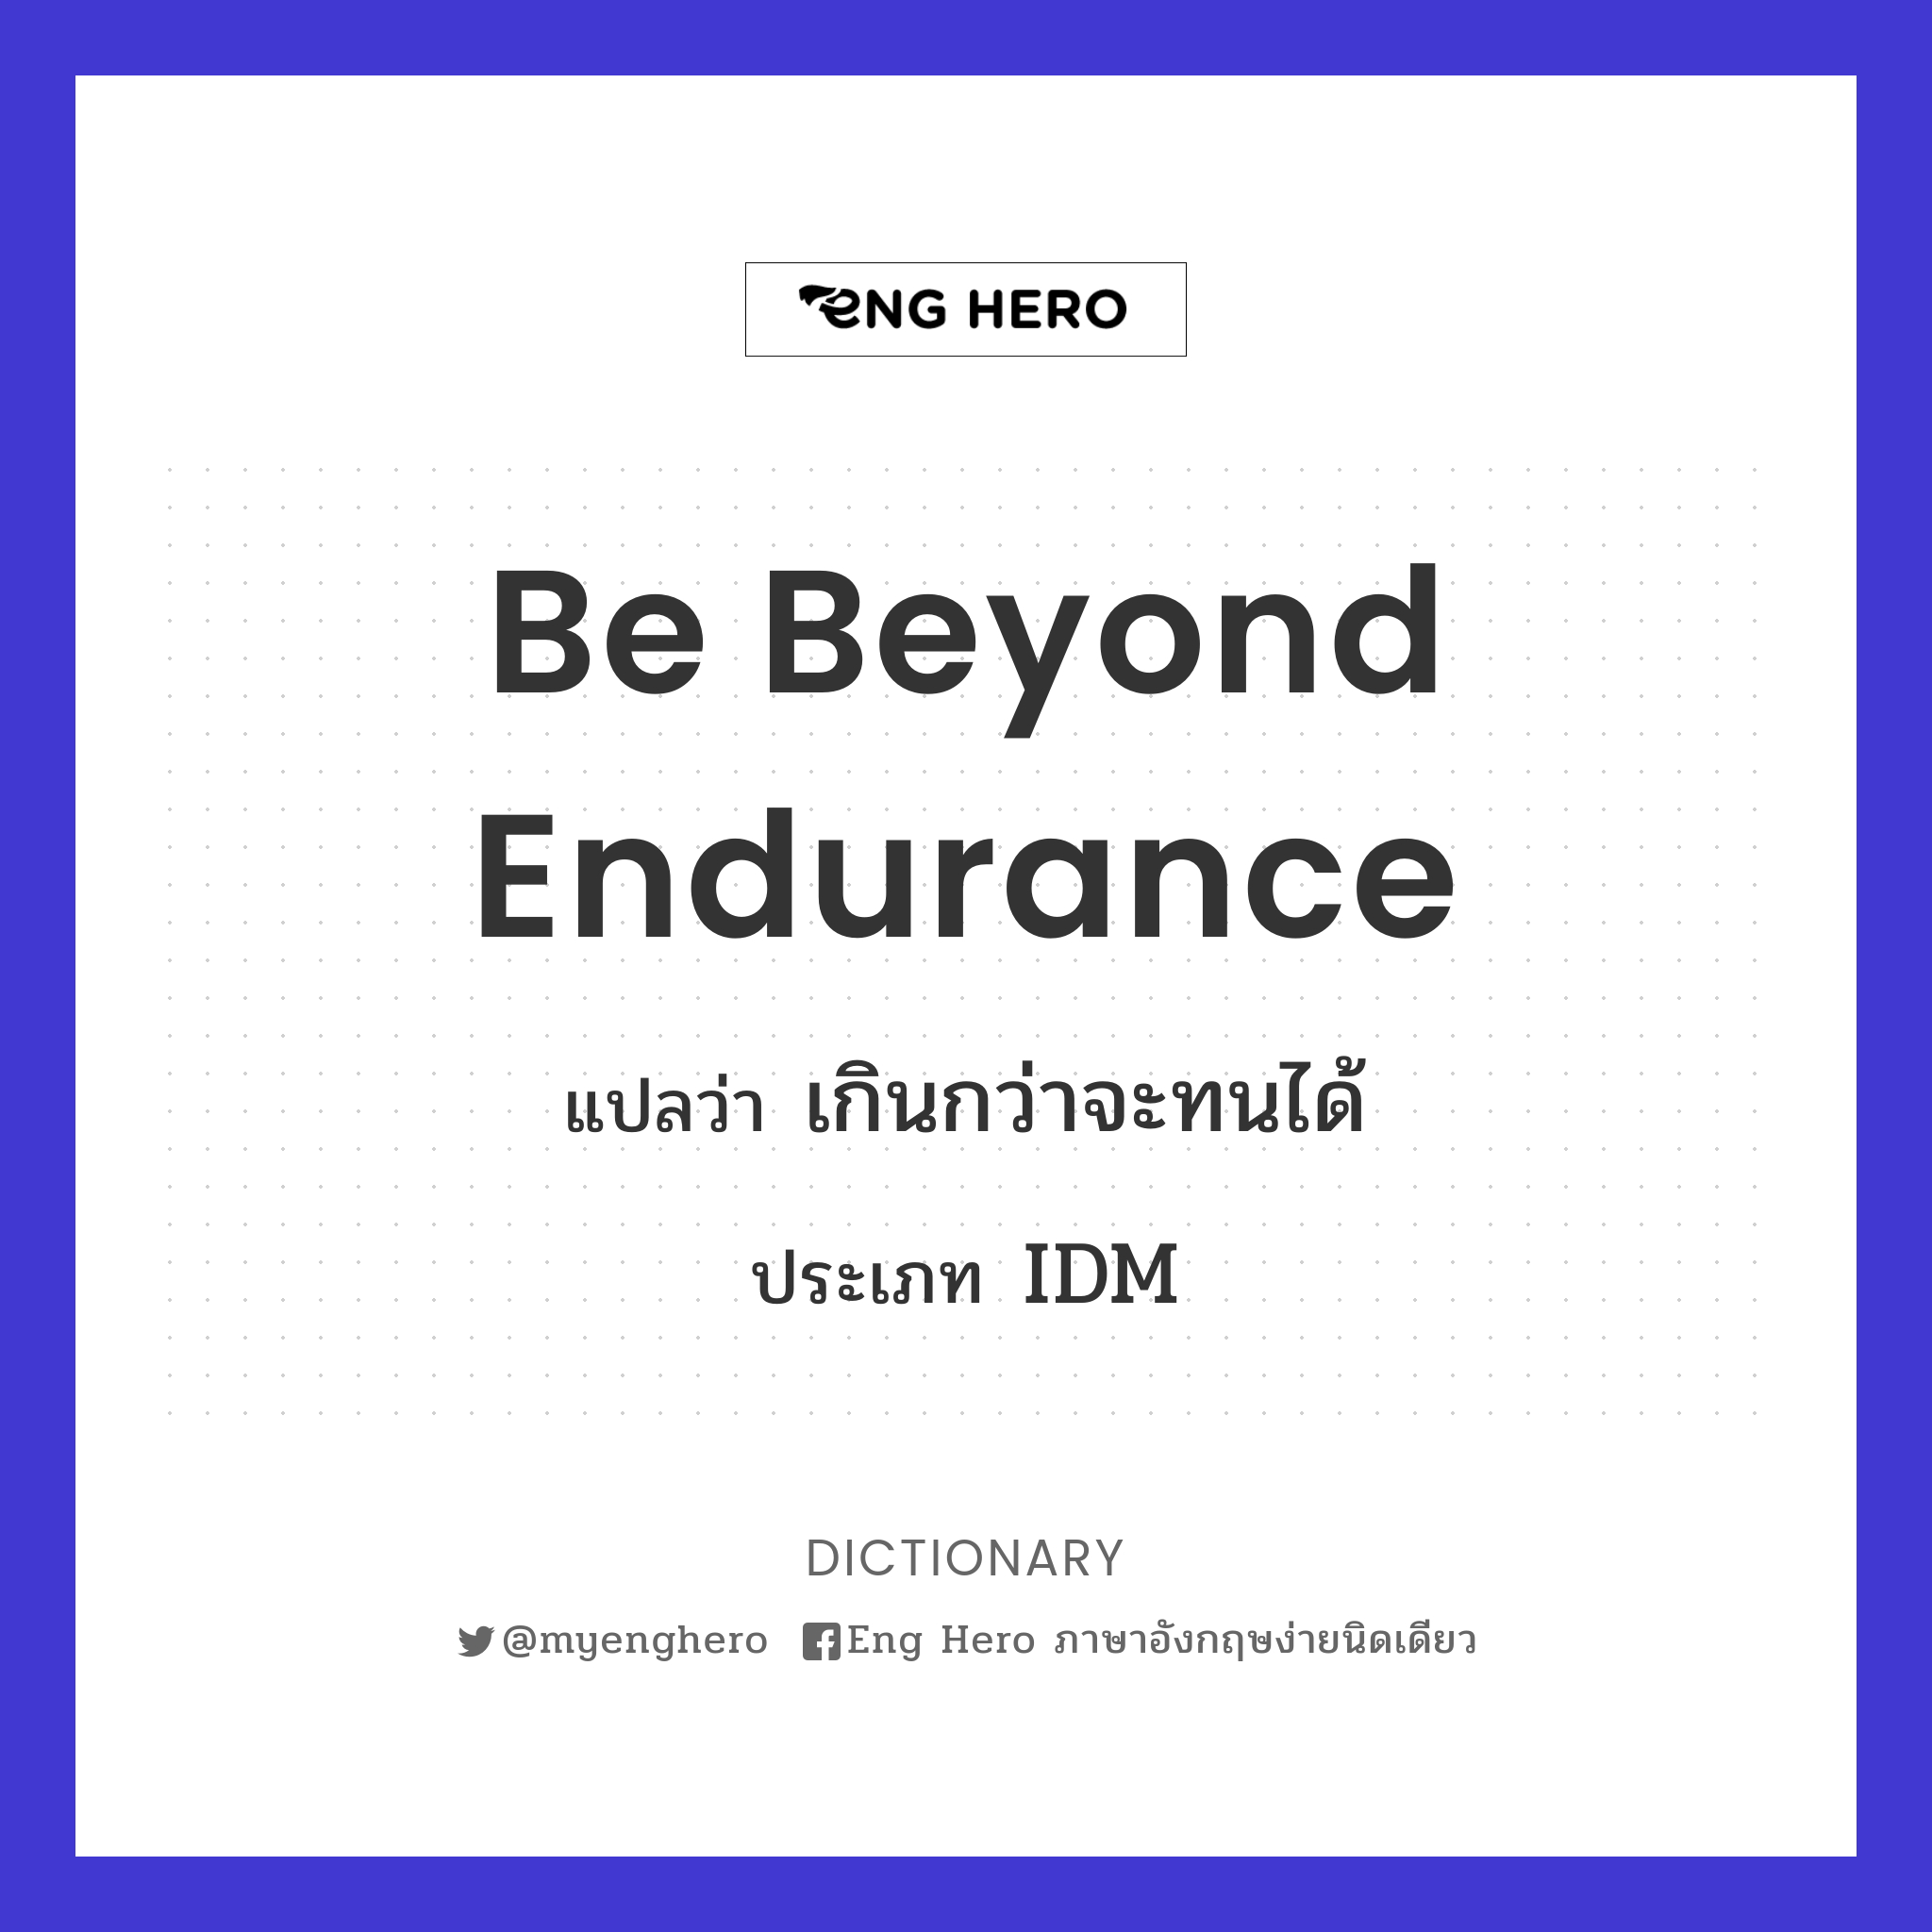 be beyond endurance